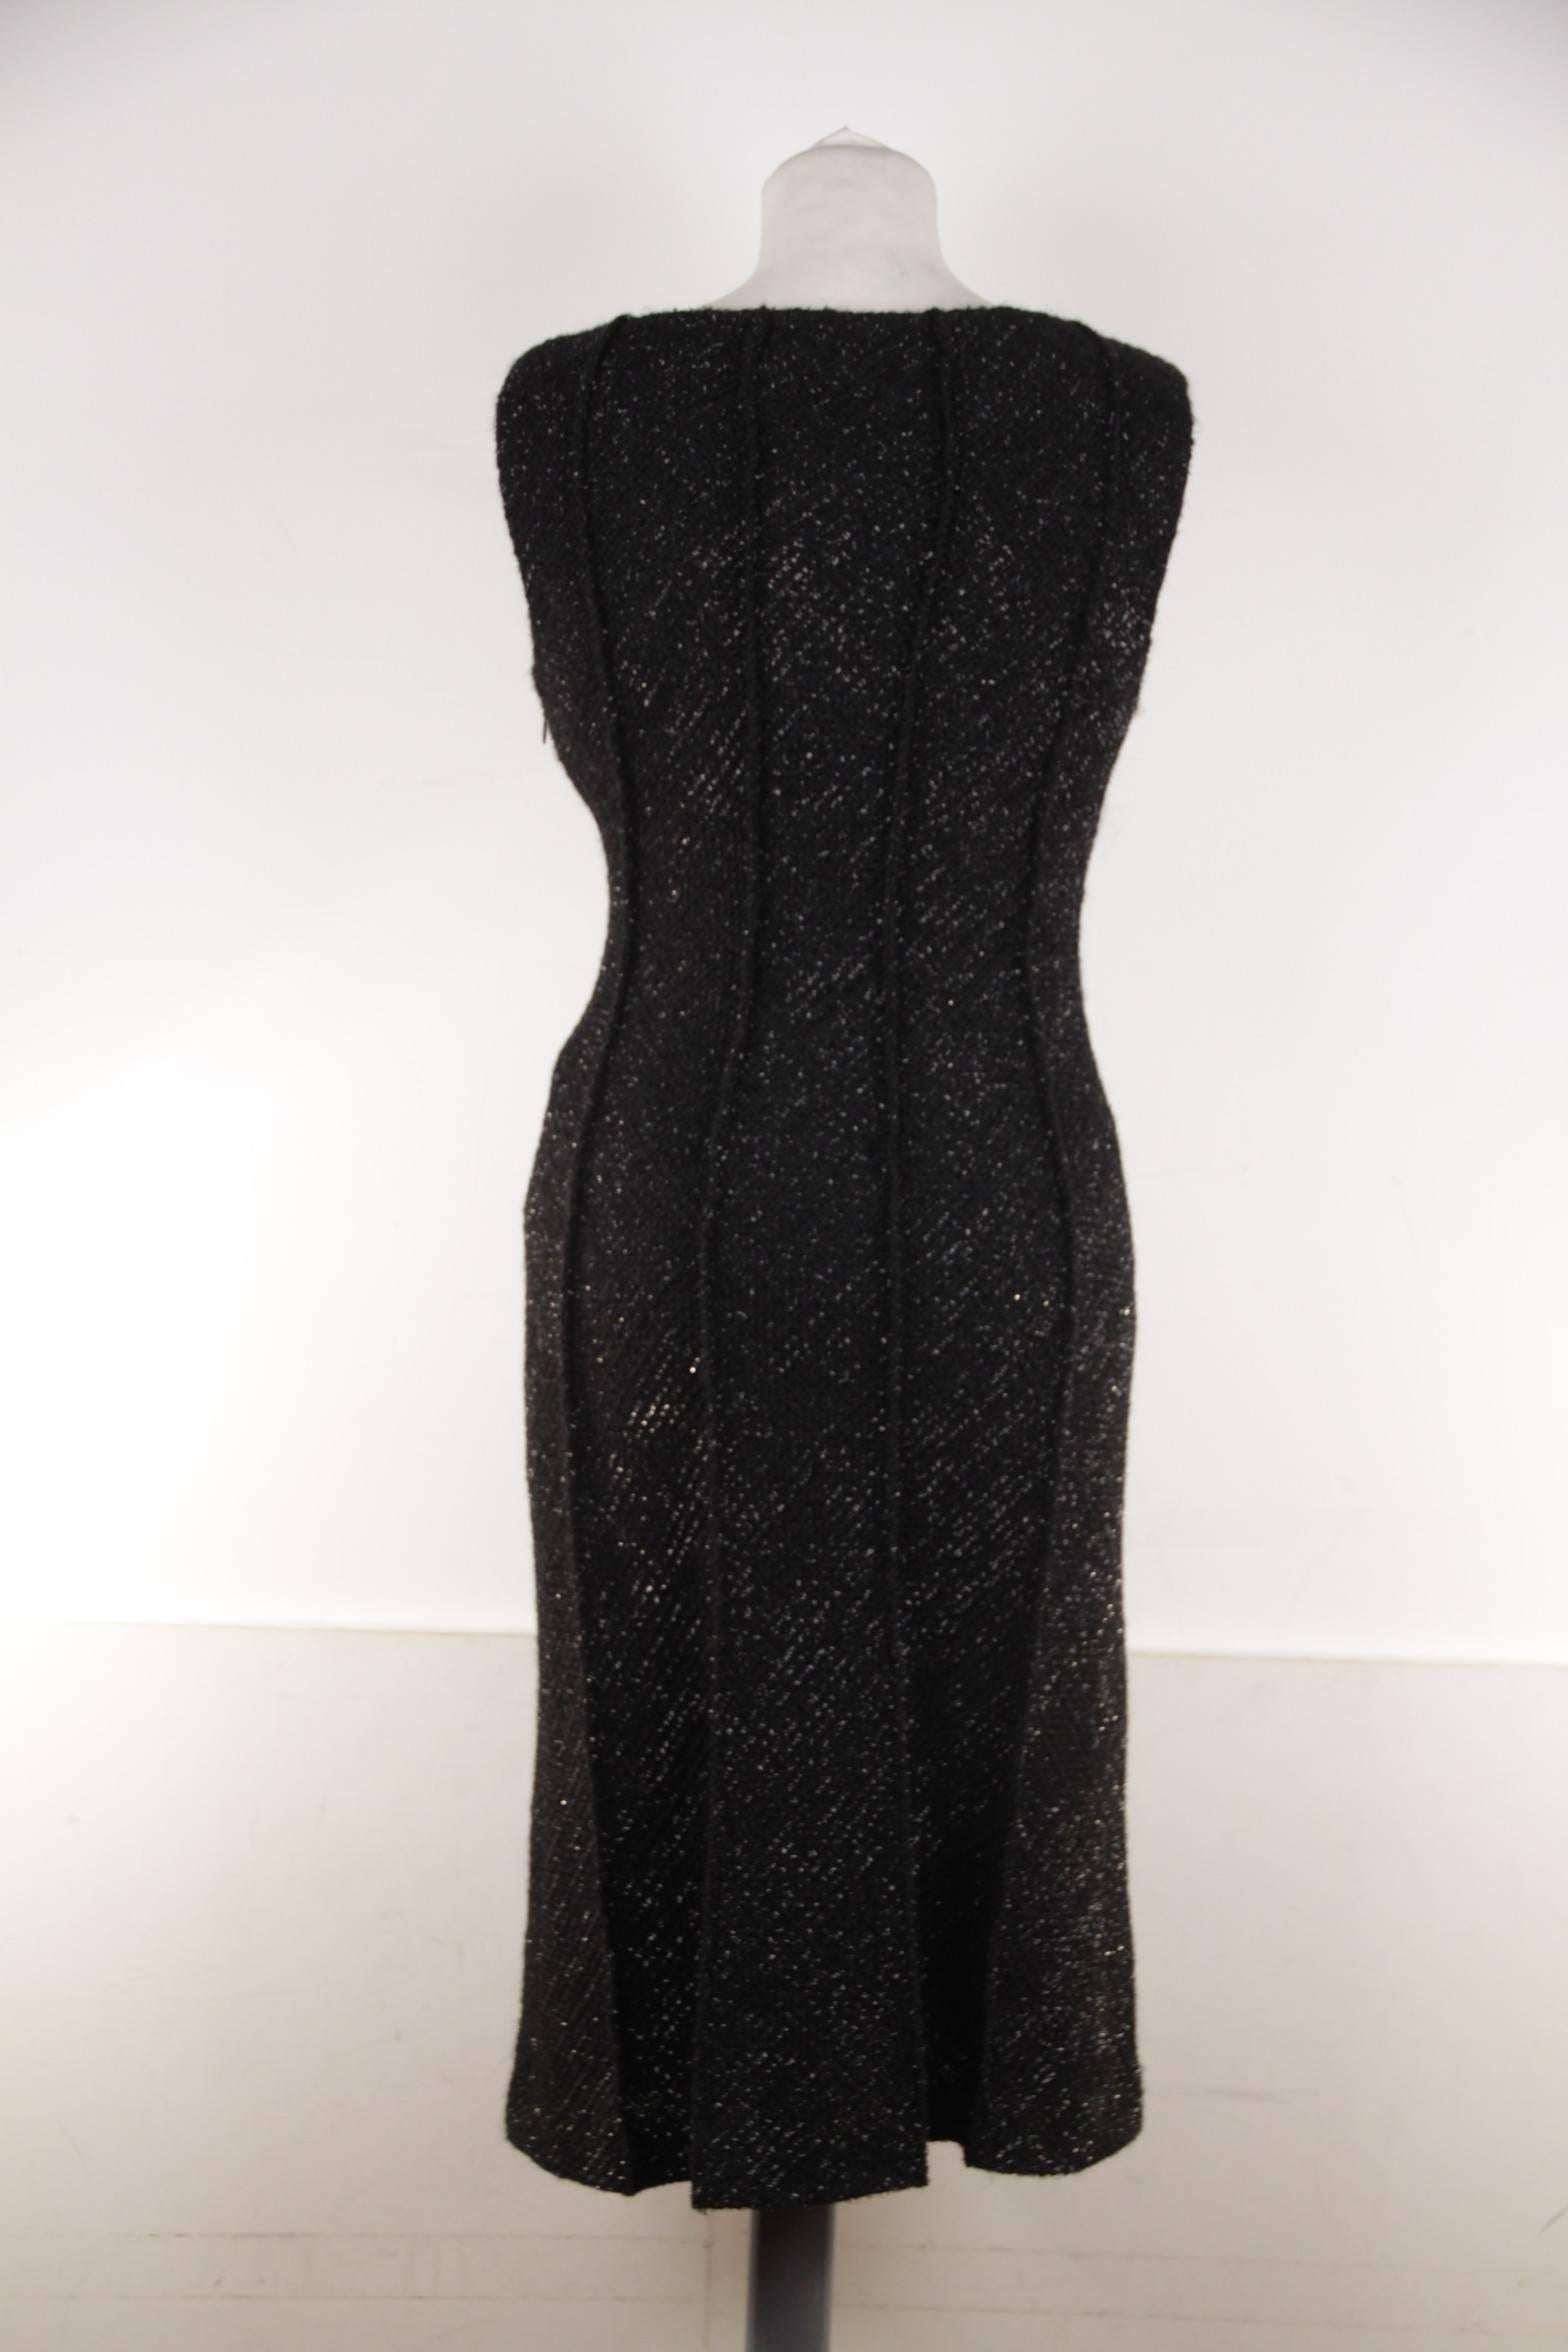 Women's ALBERTA FERRETTI Italian Boucle Tweed LITTLE BLACK DRESS Sleeveless Sz 44 IT